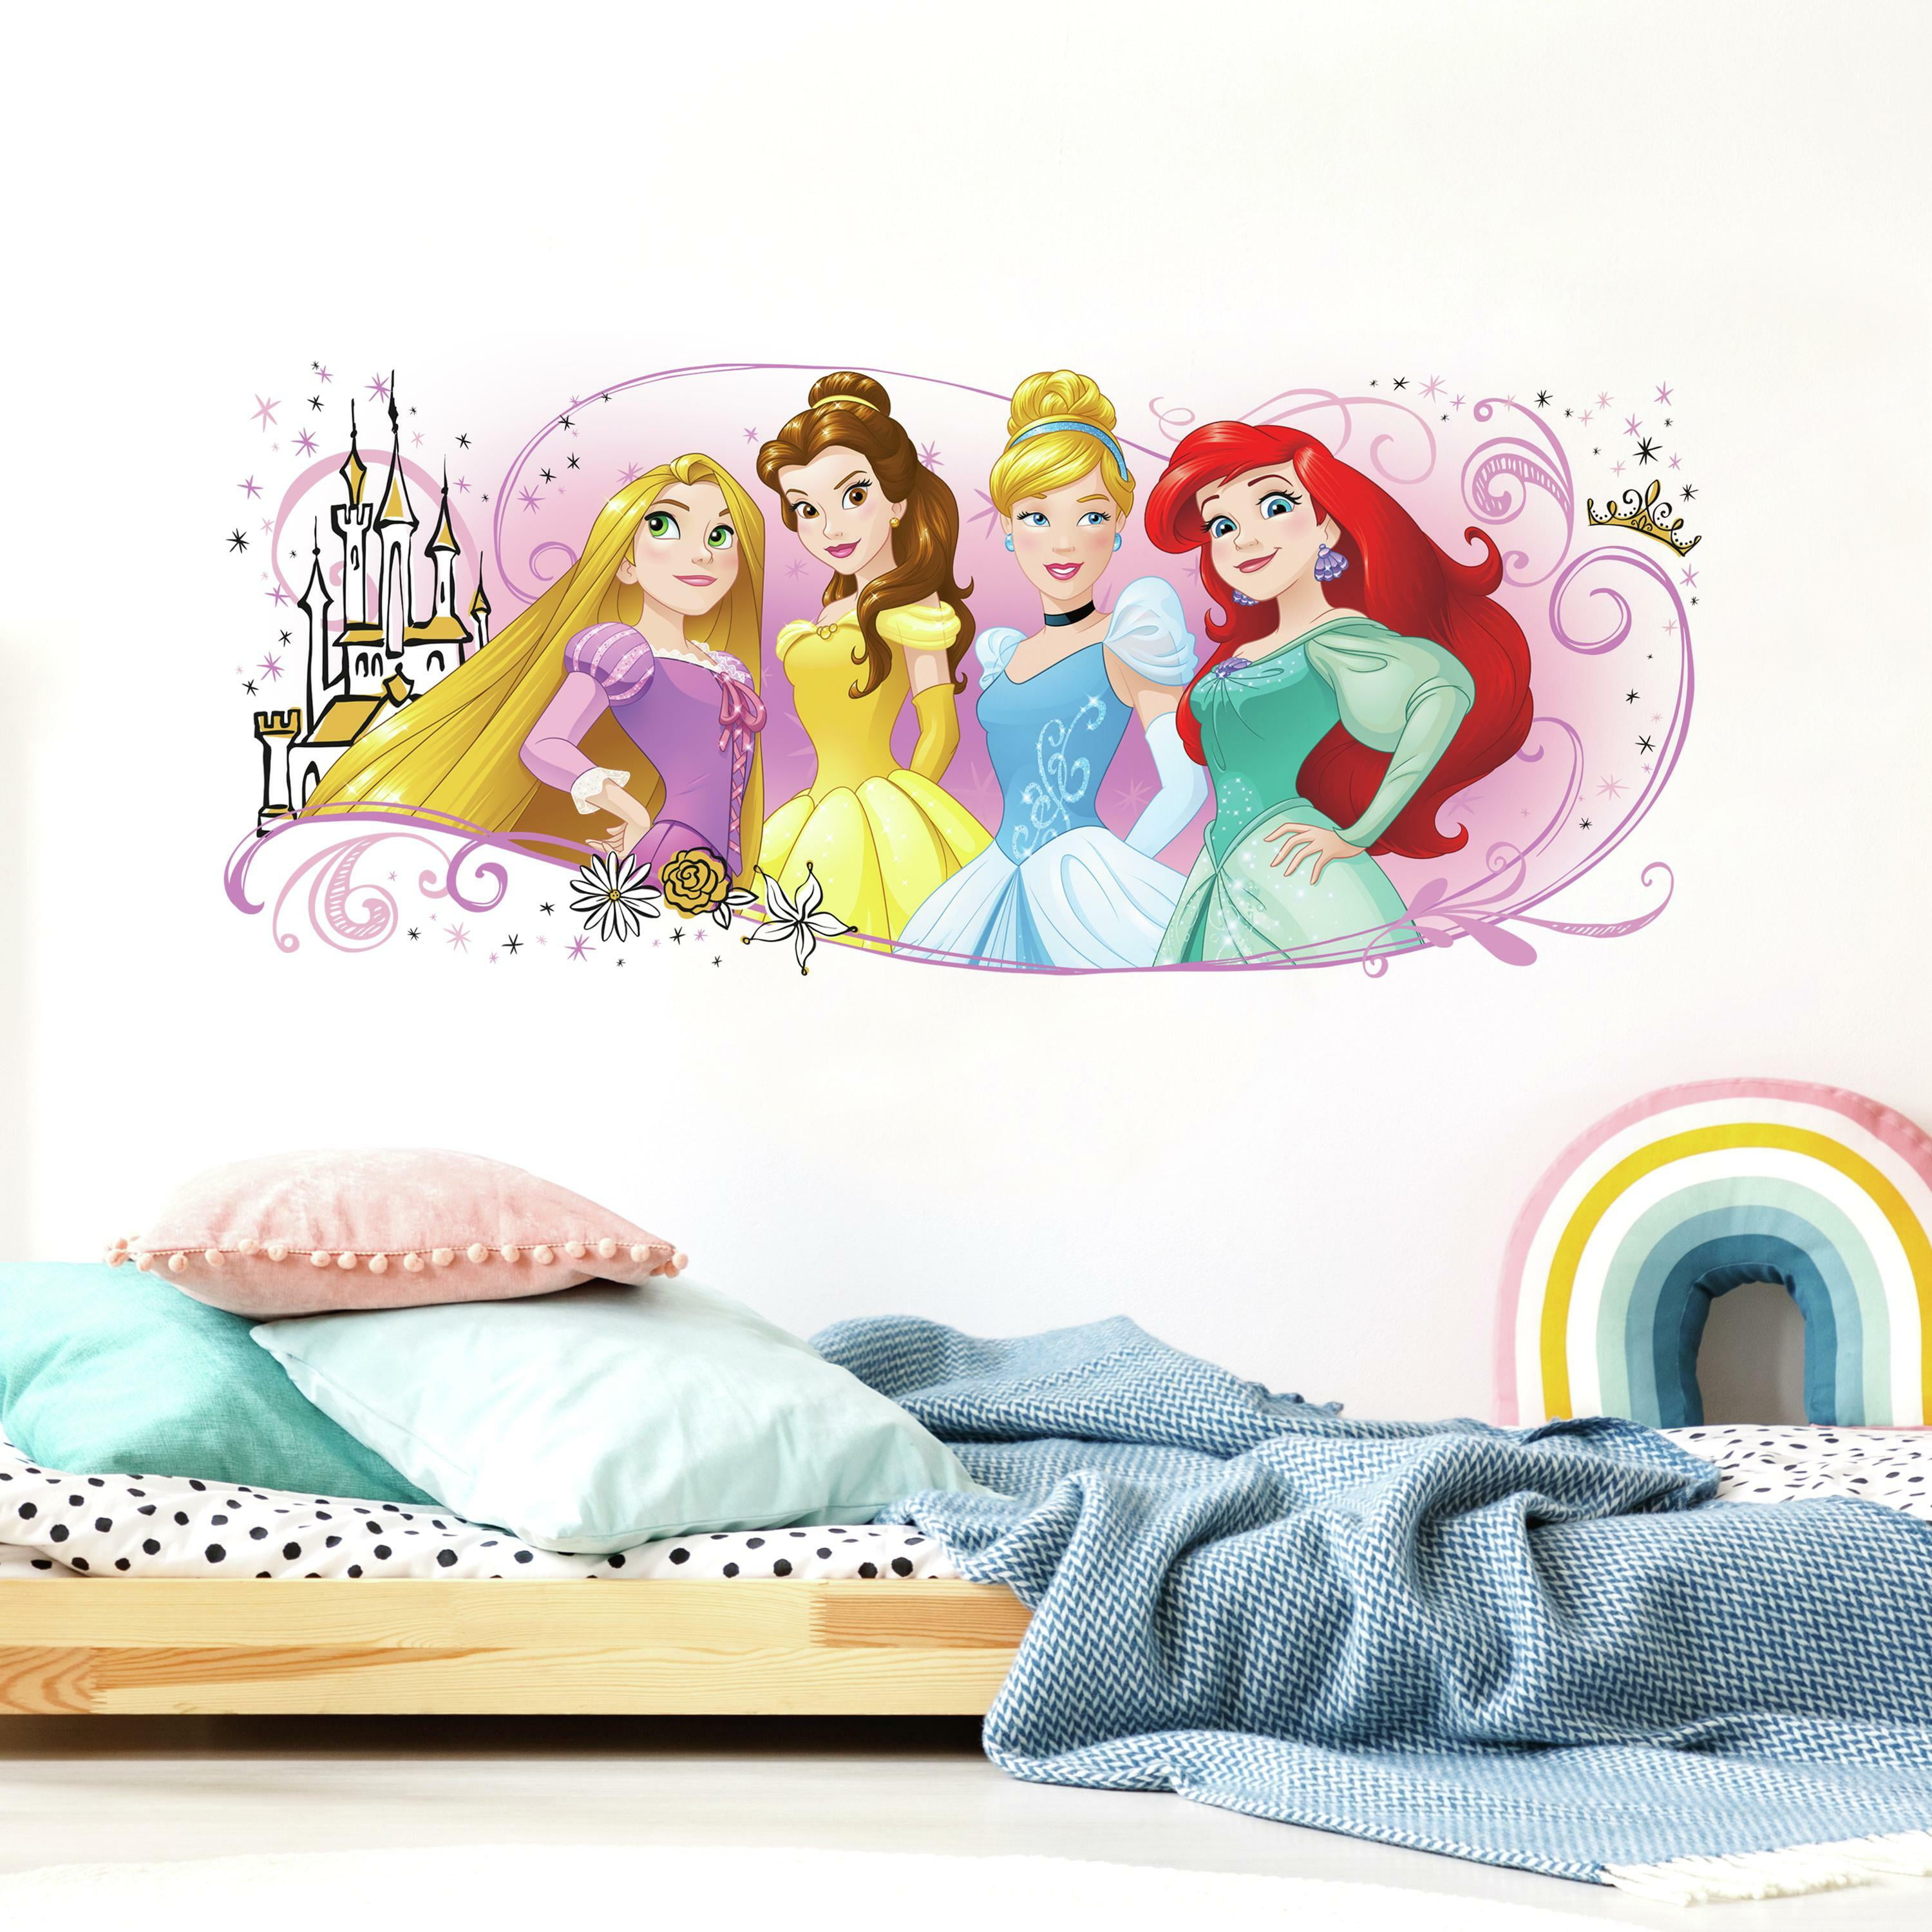 Disney Princesses children's bedroom LARGE VINYL WALL STICKER DECALS CHILDREN 5 